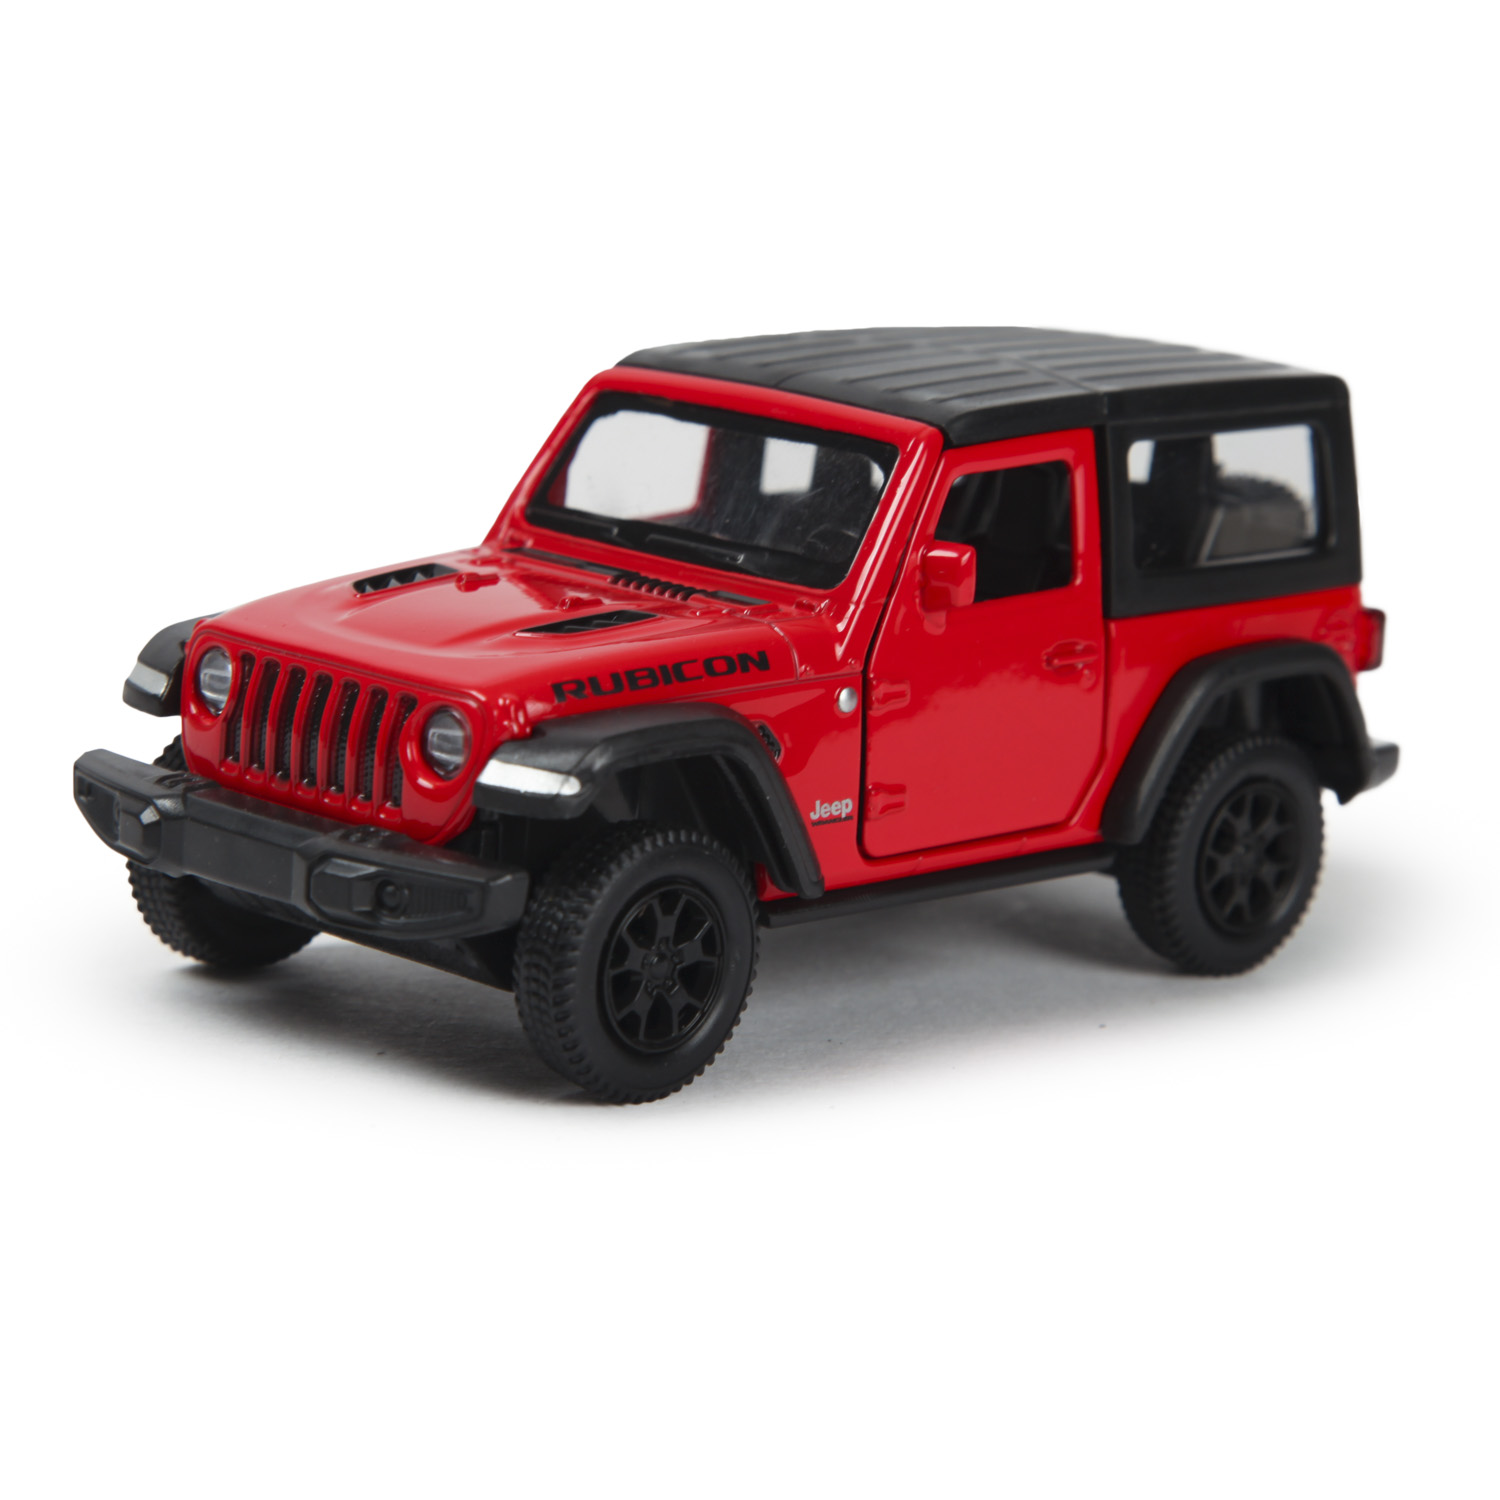 Машинка Mobicaro 1:32 Jeep Rubicon Hard Top Красная 544060(B) 544060(B) - фото 1